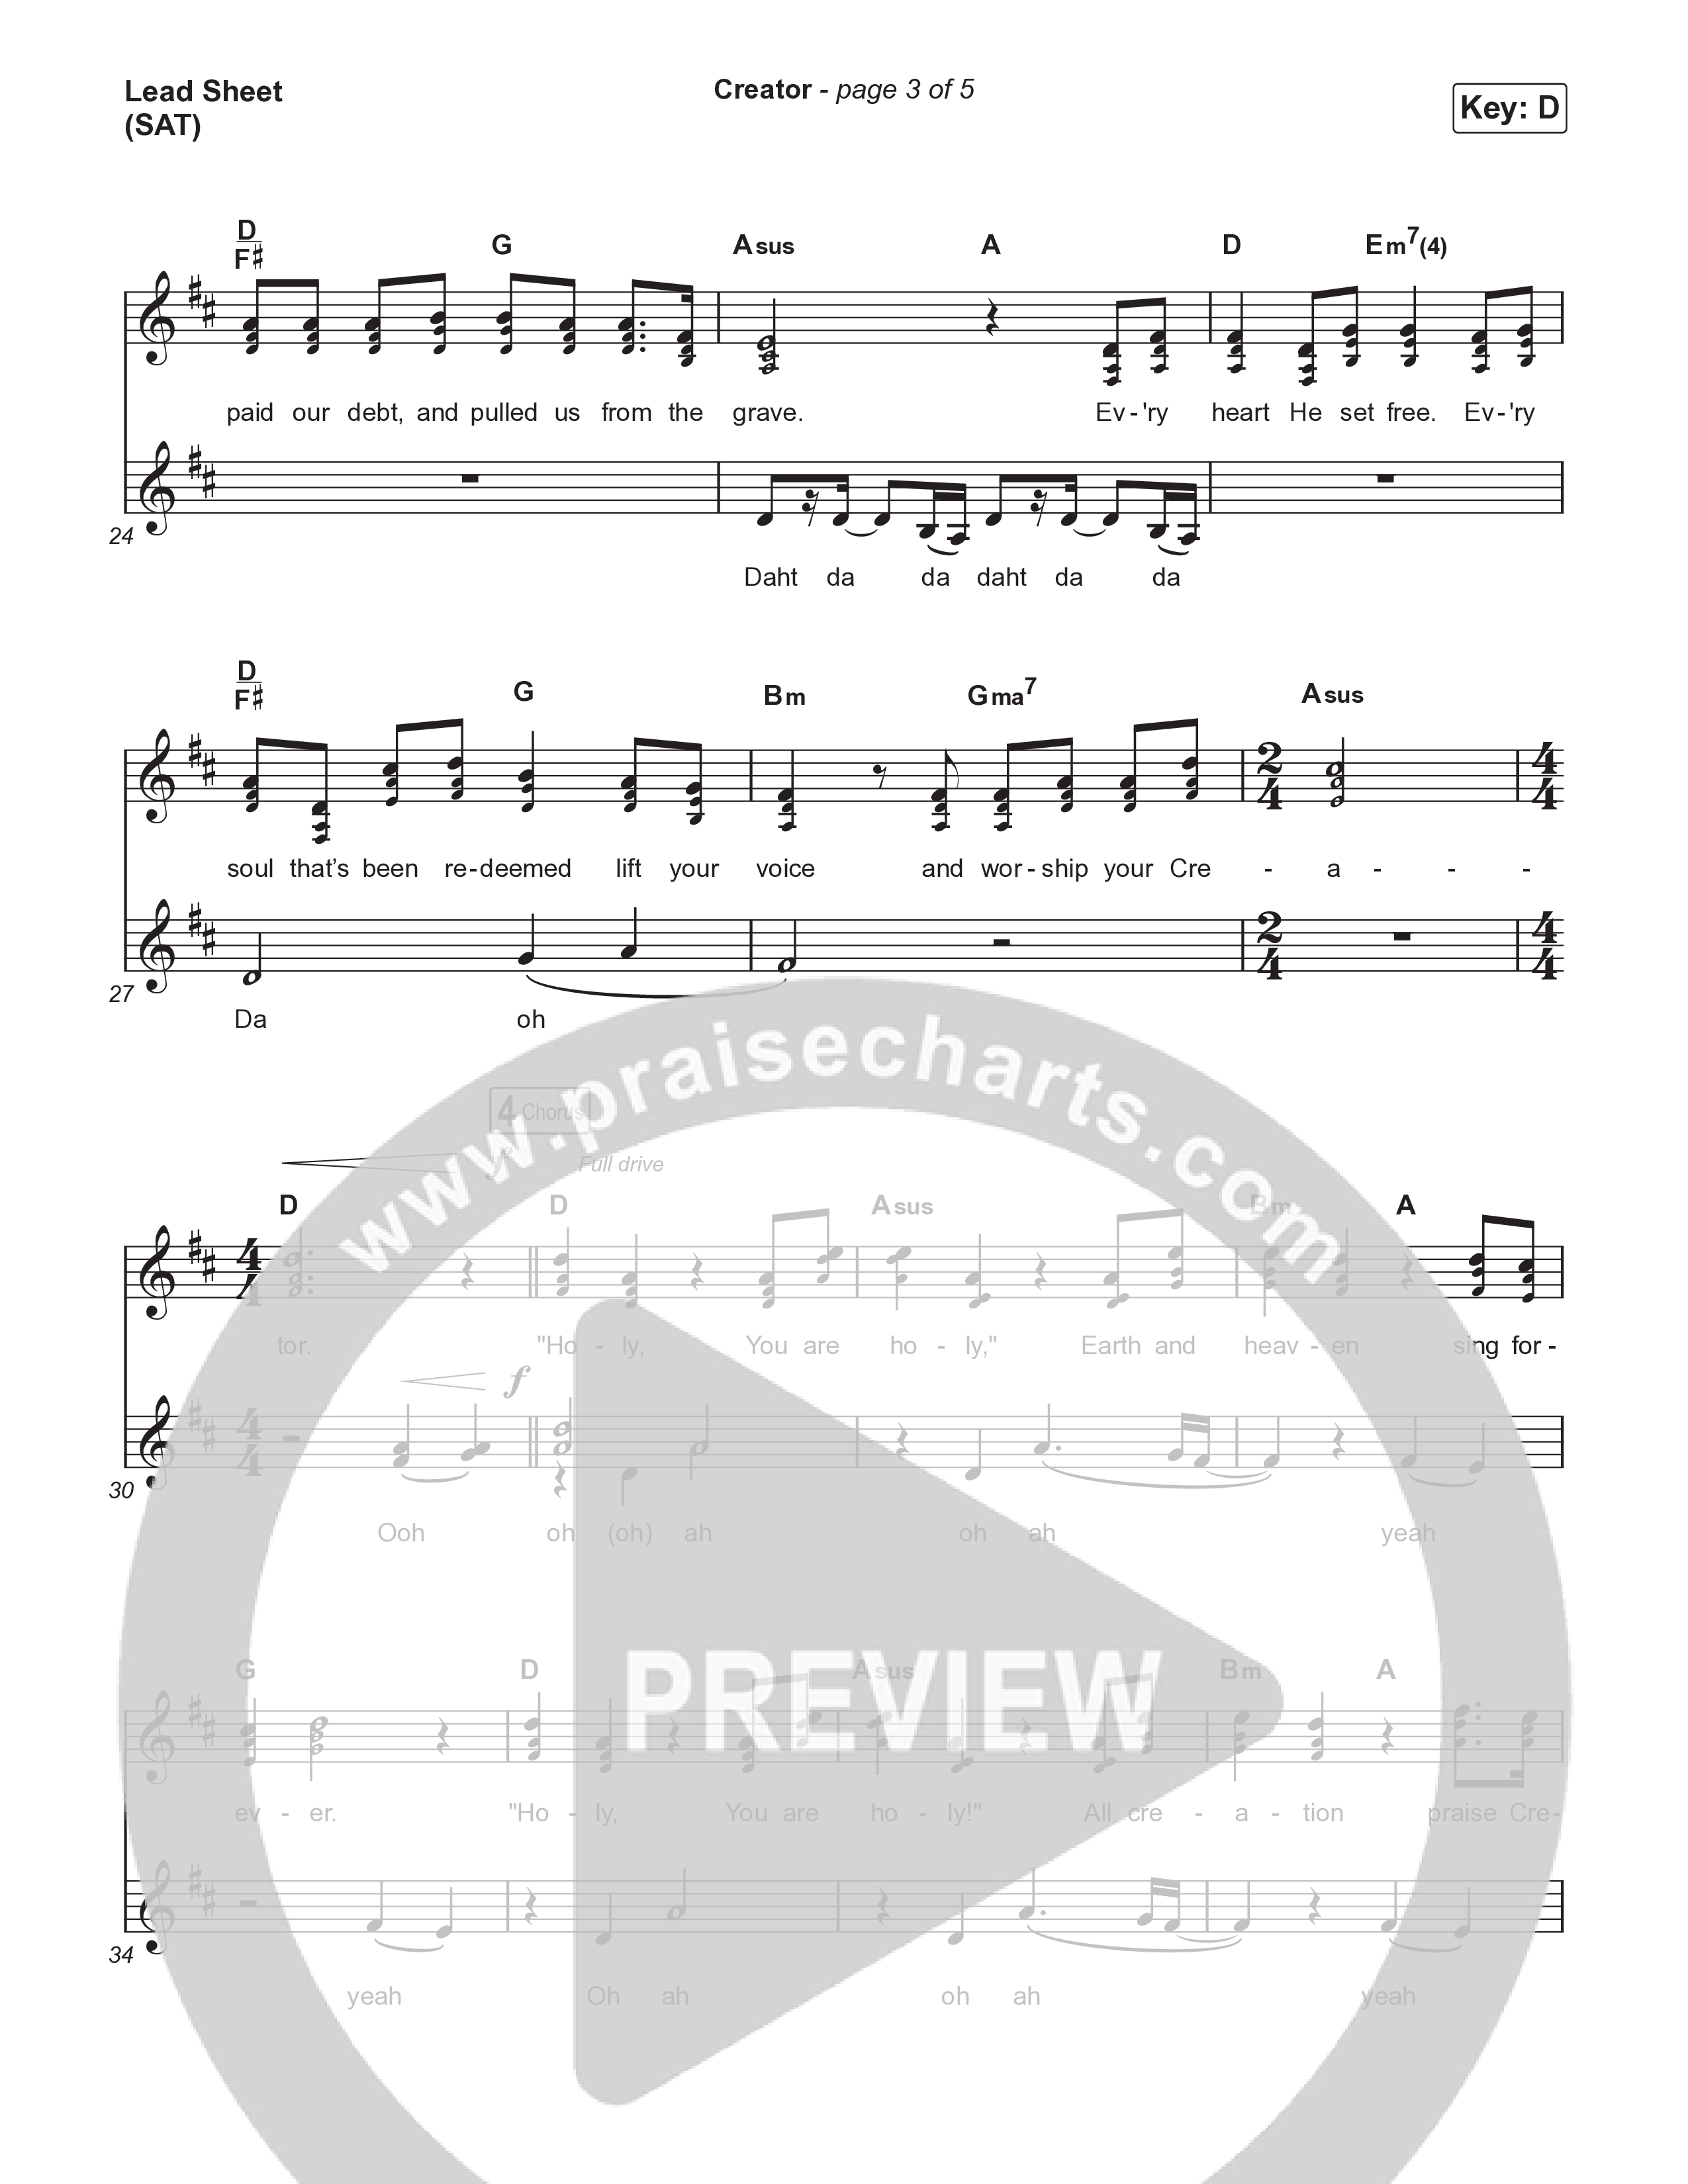 Creator (Choral Anthem SATB) Lead Sheet (SAT) (Phil Wickham / Arr. Mason Brown)